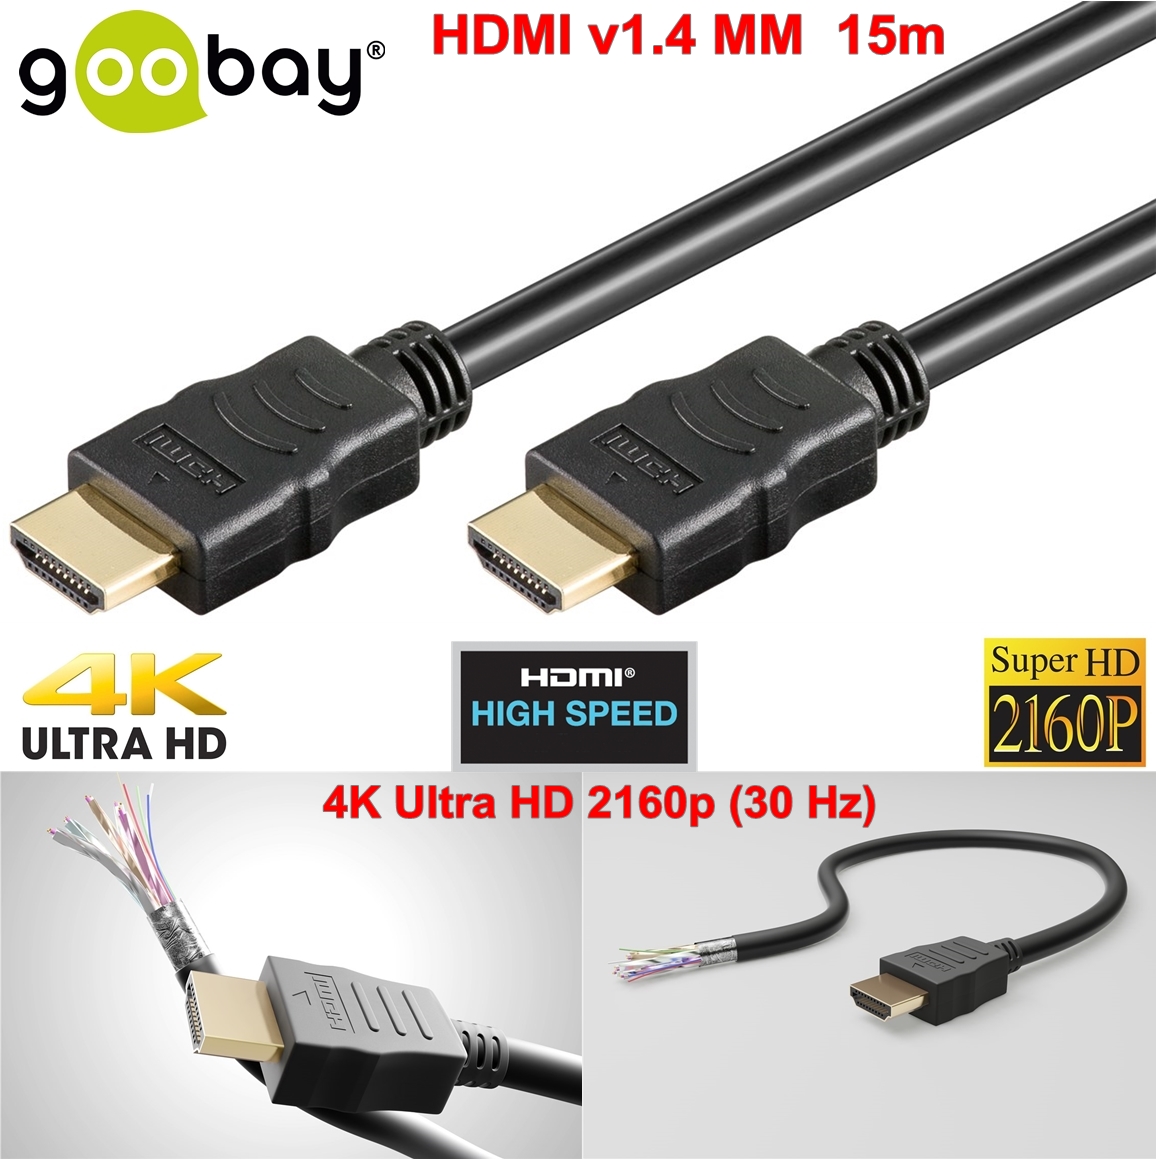 HDMI v1.4 MM  15m (30 Hz2160p) GOOBAY 60616